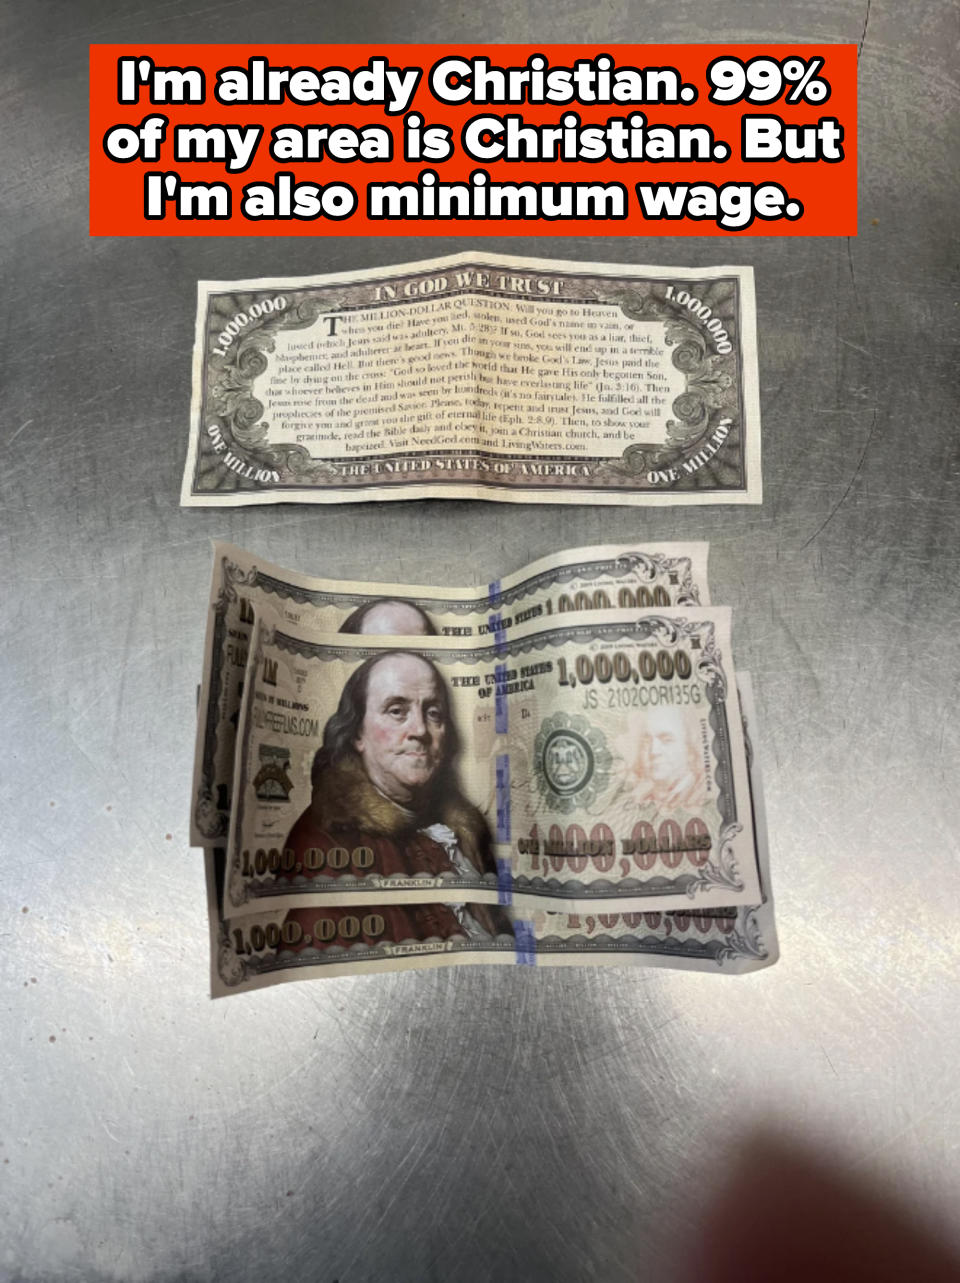 A novelty one million dollar bill featuring Benjamin Franklin beneath a standard one dollar bill